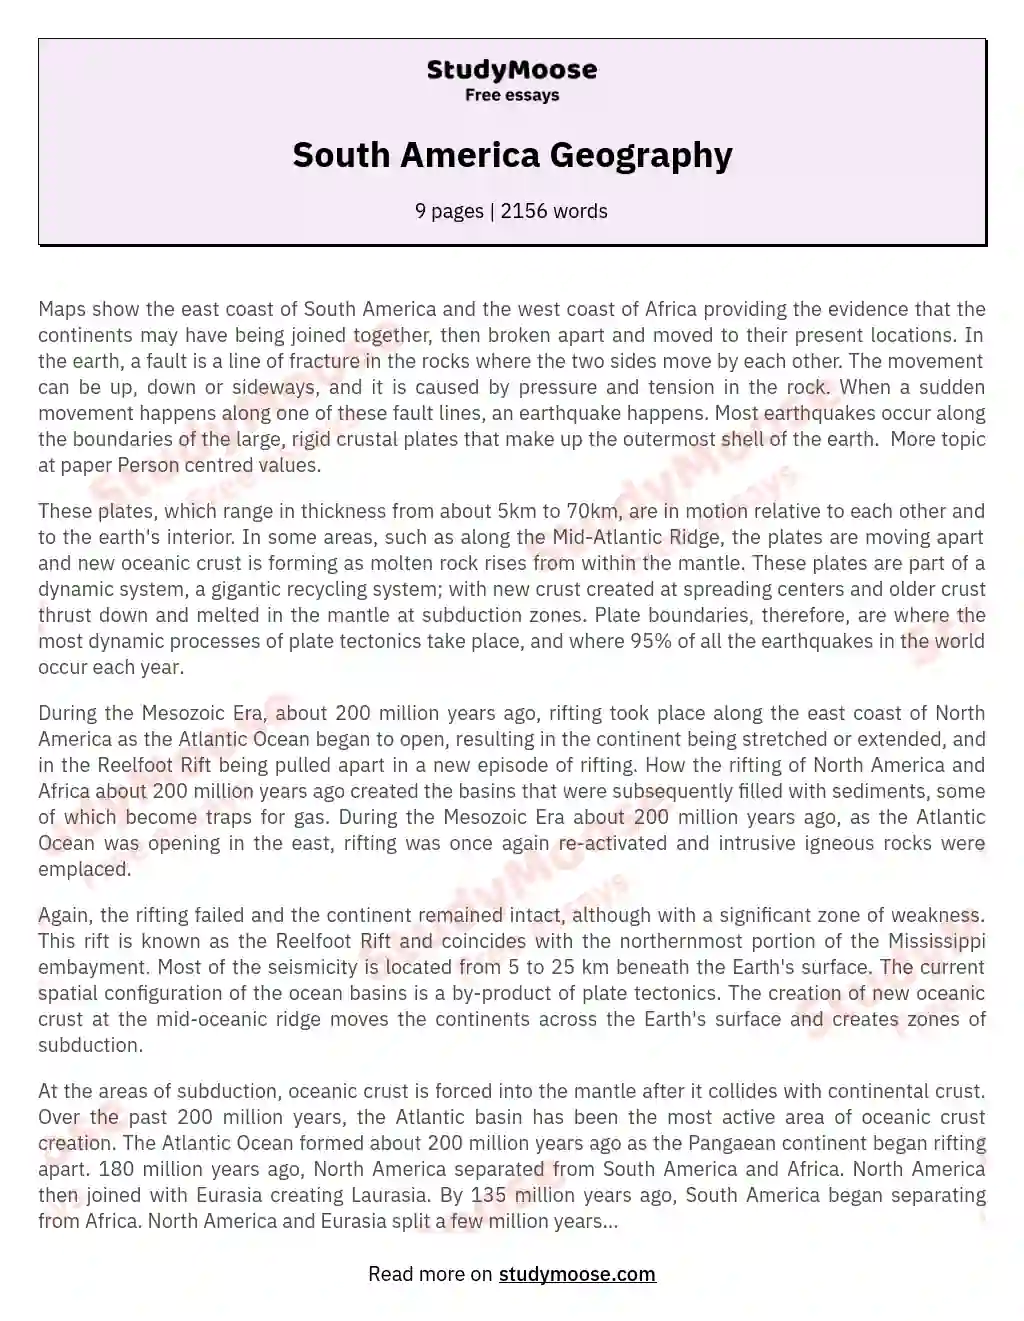 South America Geography essay